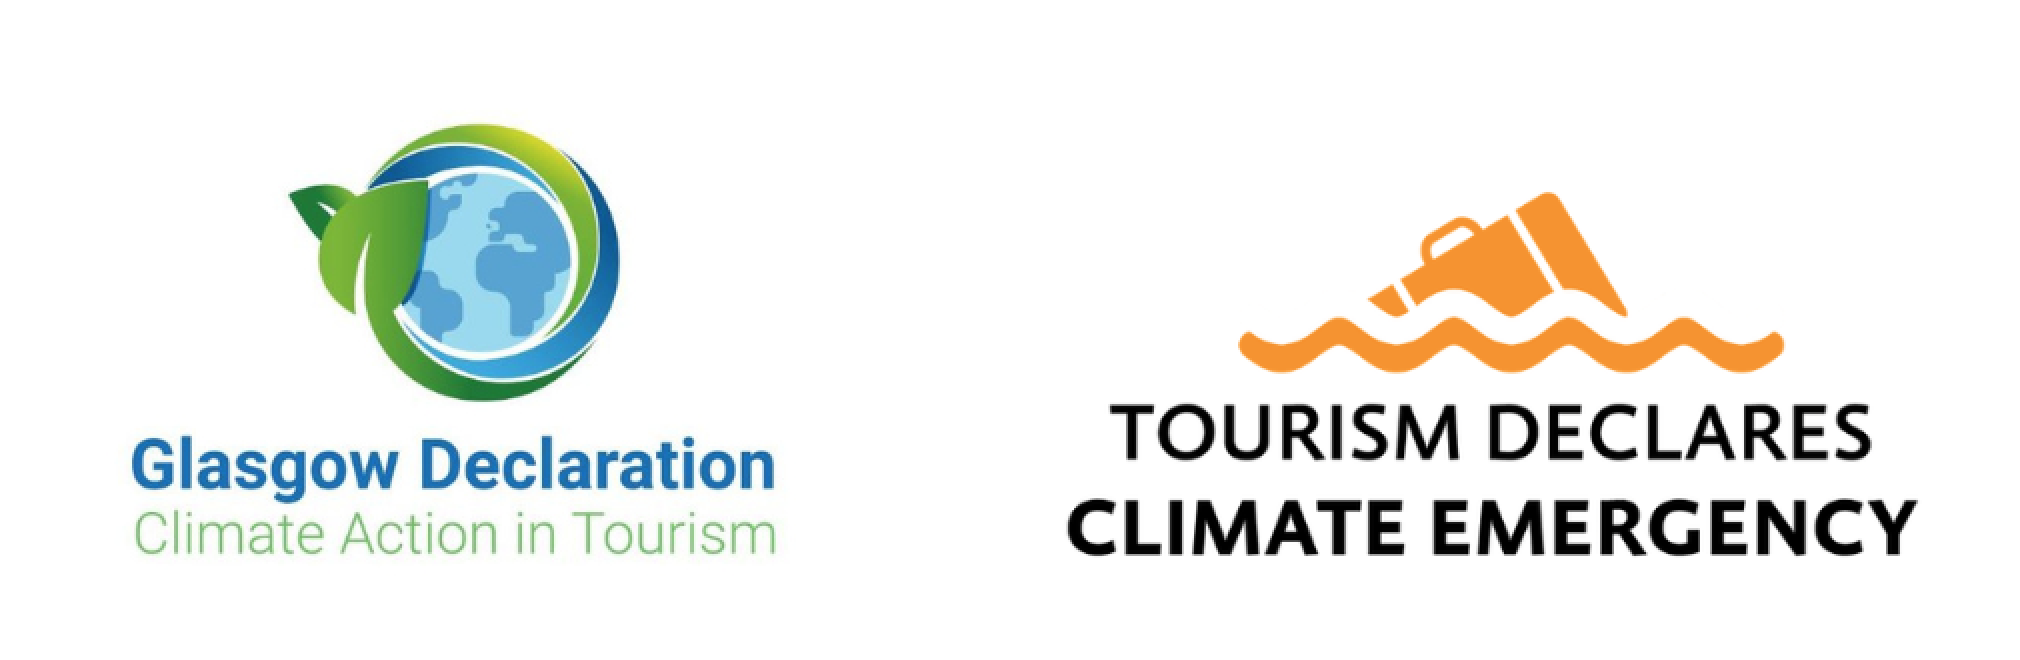 tourism declares a climate emergency and glasgow declaration logos